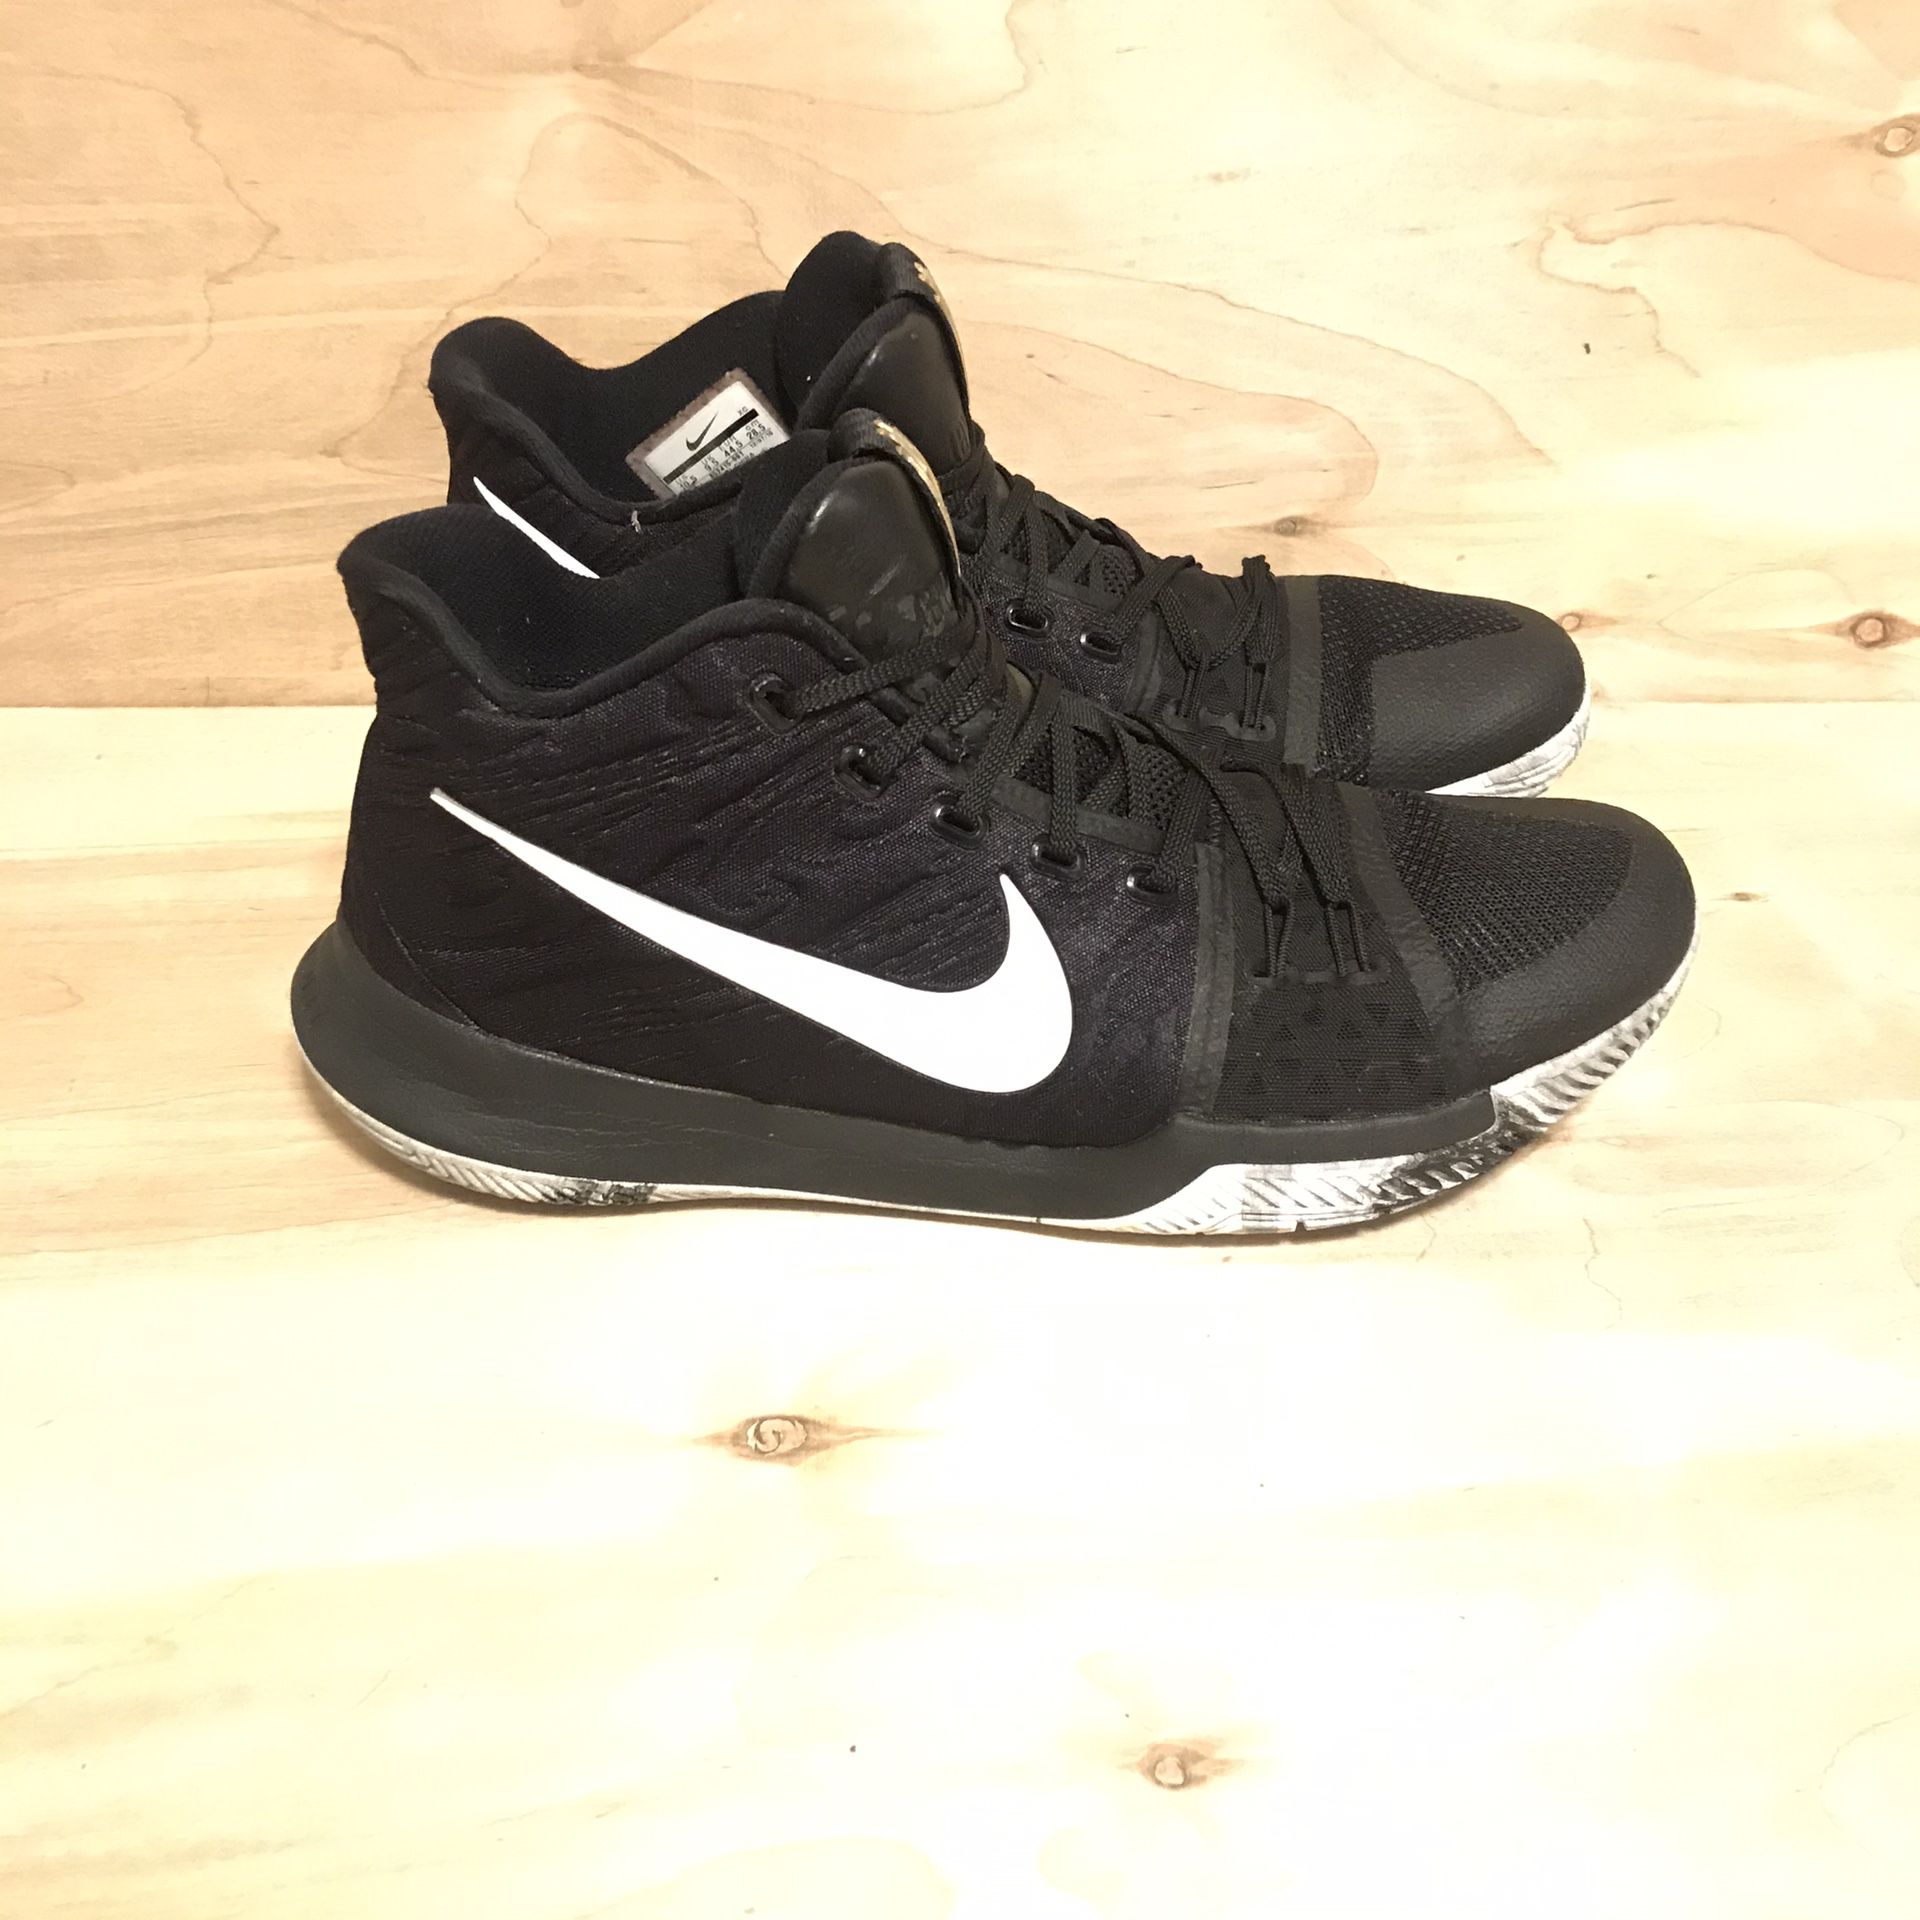 Nike Kyrie 3 BHM Size 10.5 Basketball Shoes